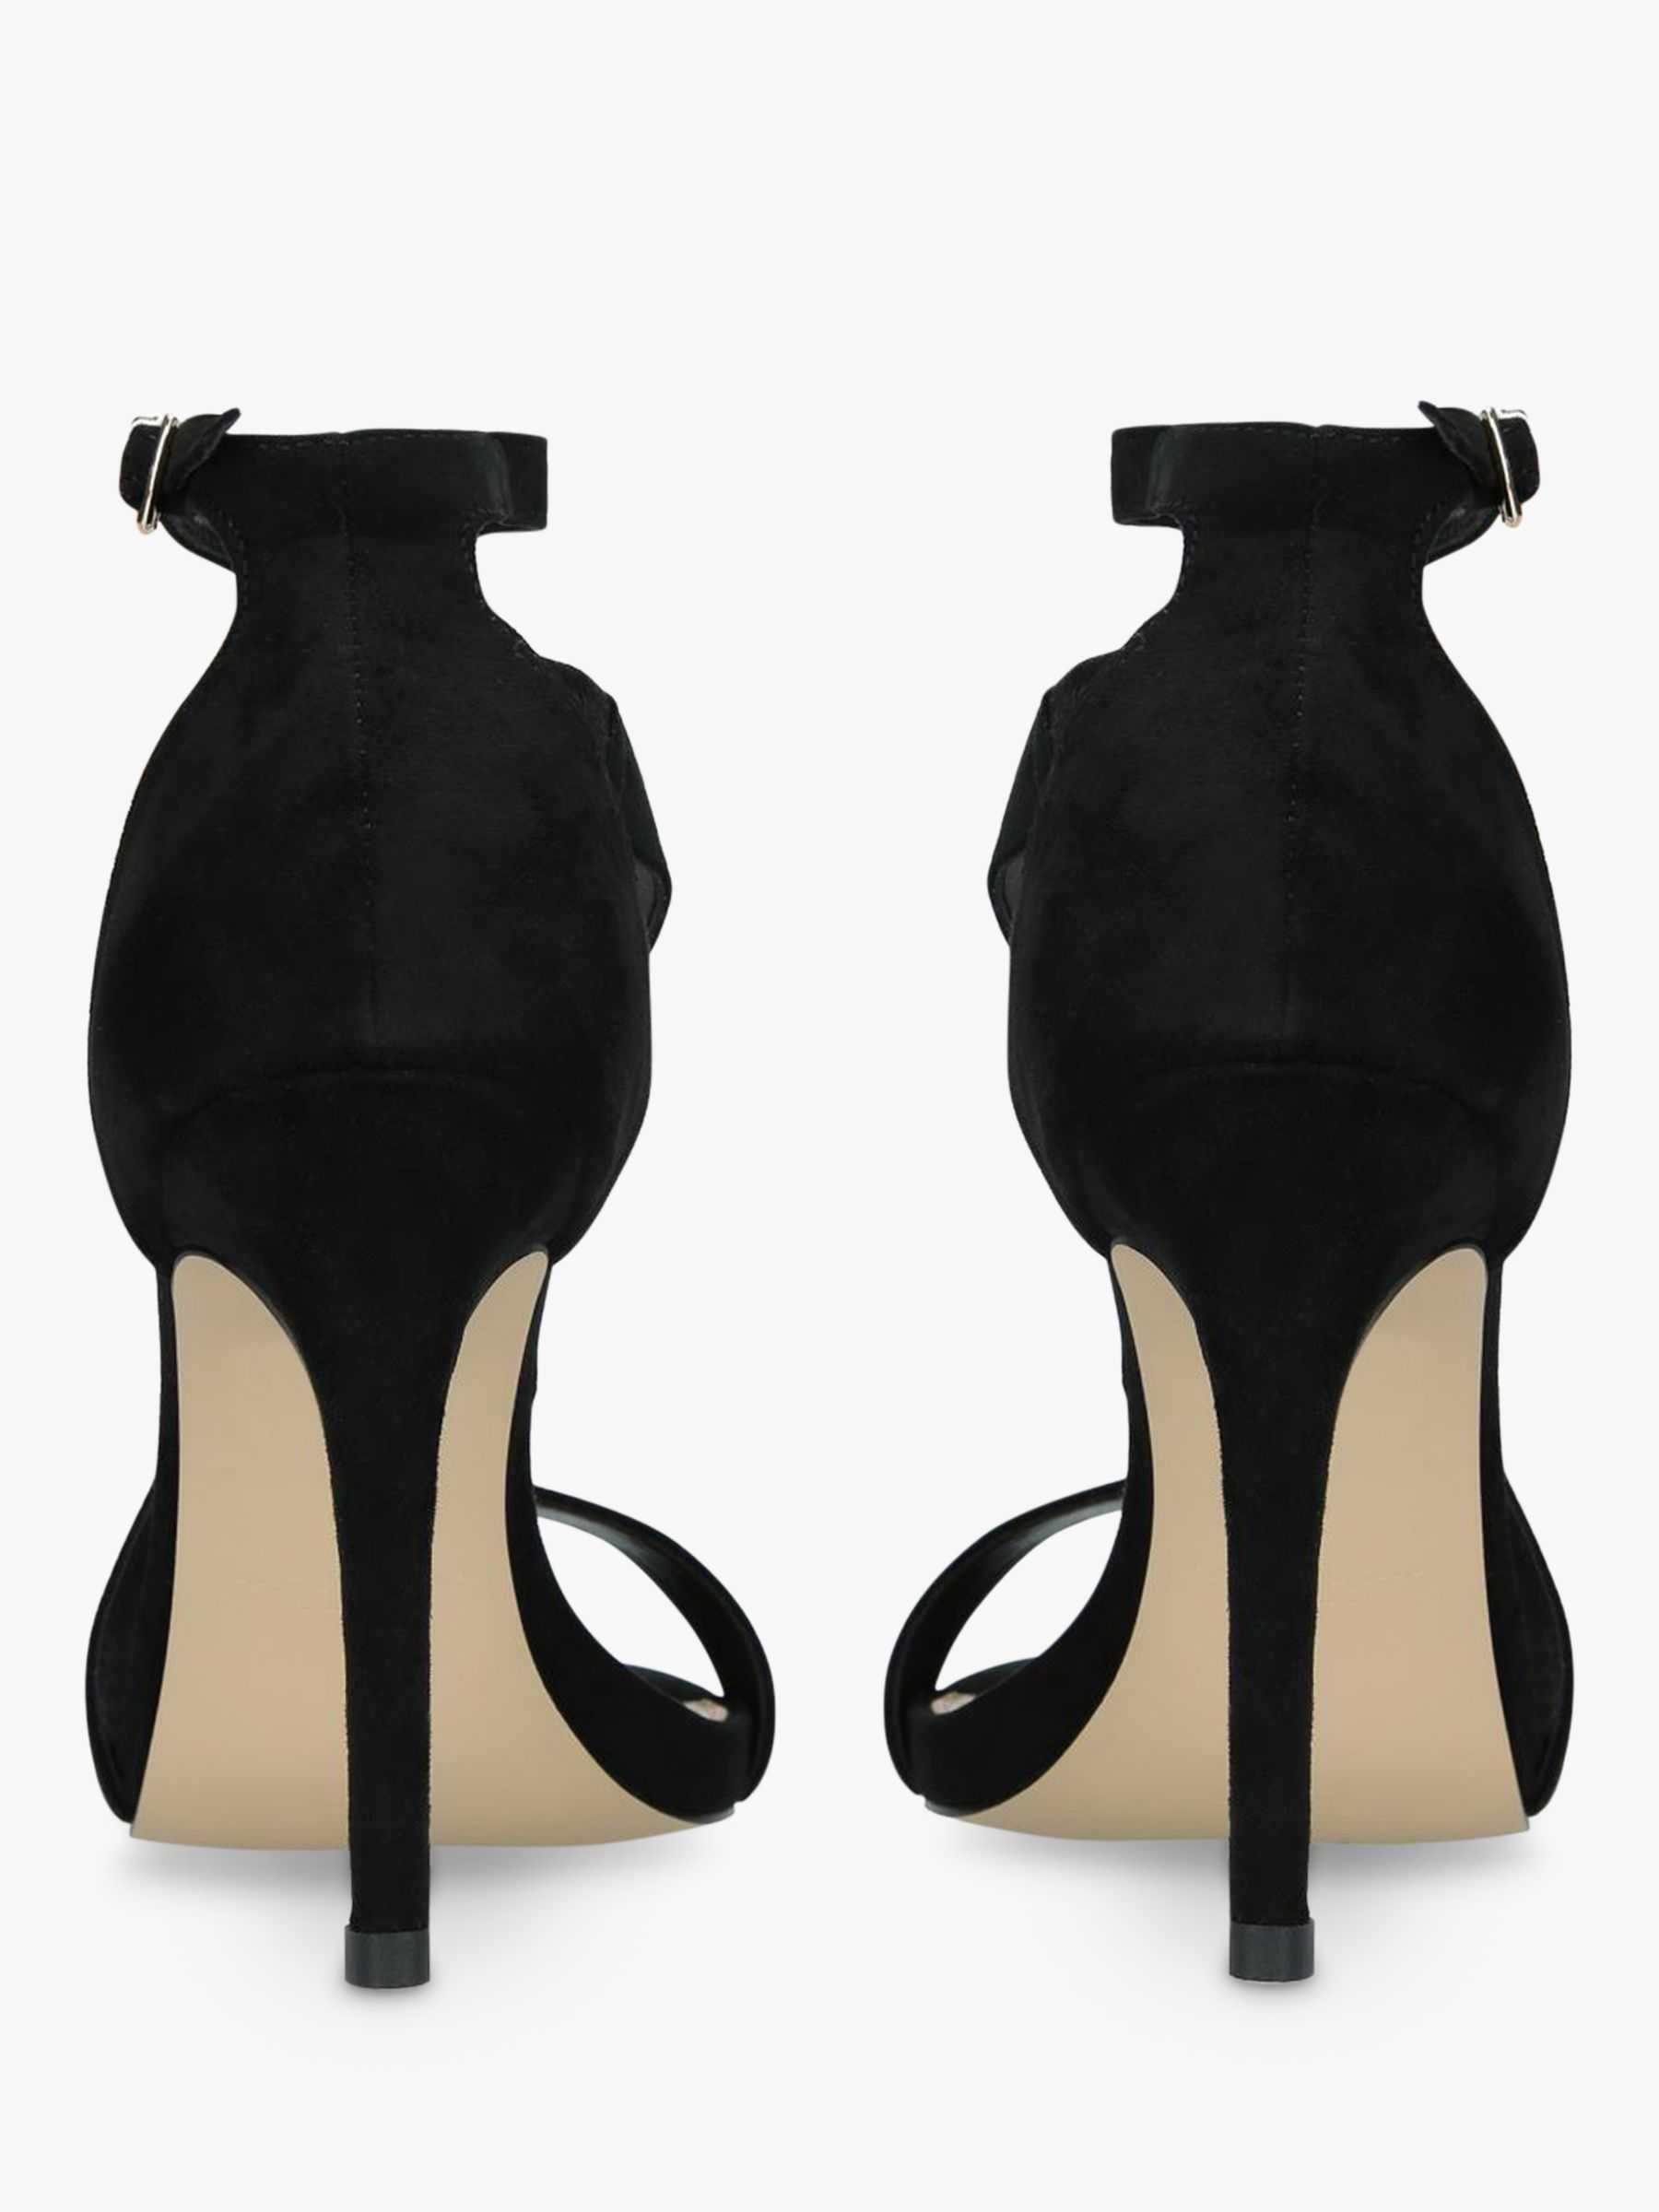 carvela black strappy heels